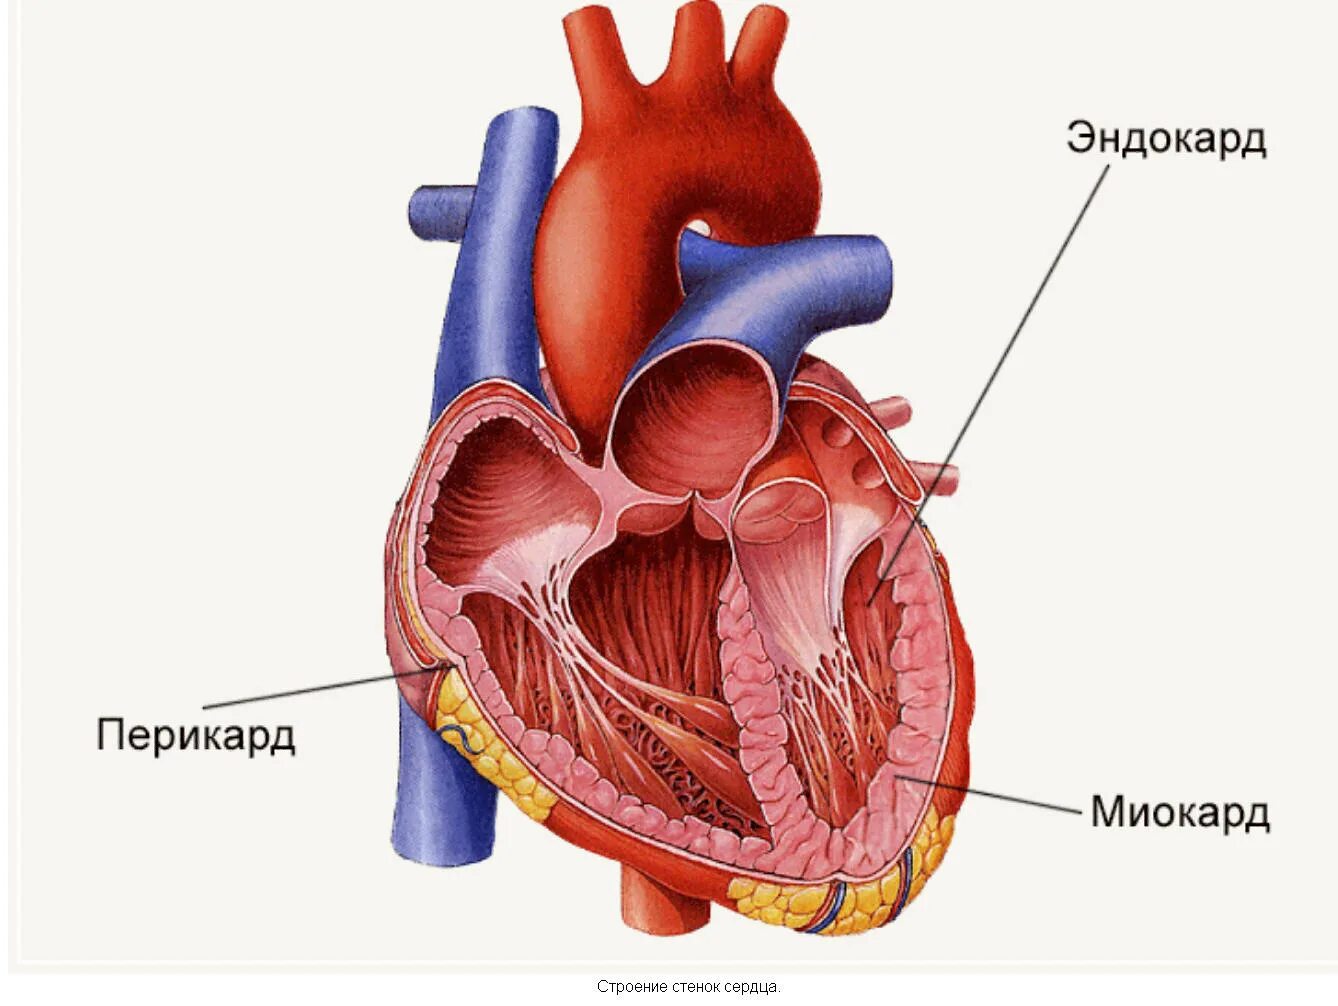 Стенка анатомия. Эндокард сердца анатомия. Миокард перикард эндокард. Строение сердца эпикард миокард. Стенка сердца эндокард миокард эпикард.